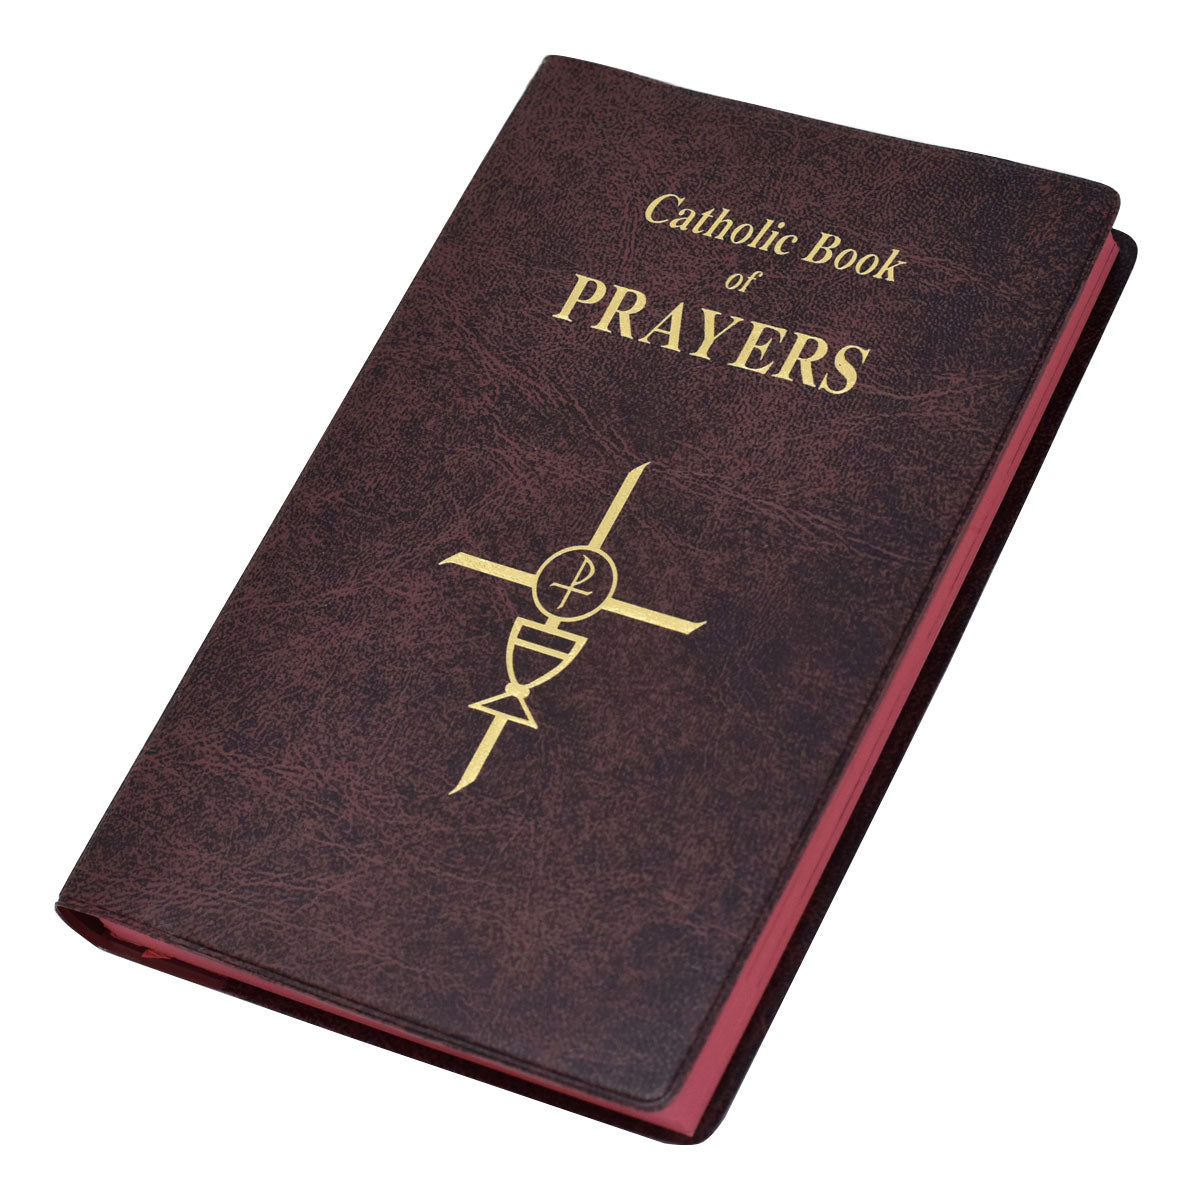 Catholic Book of Prayer